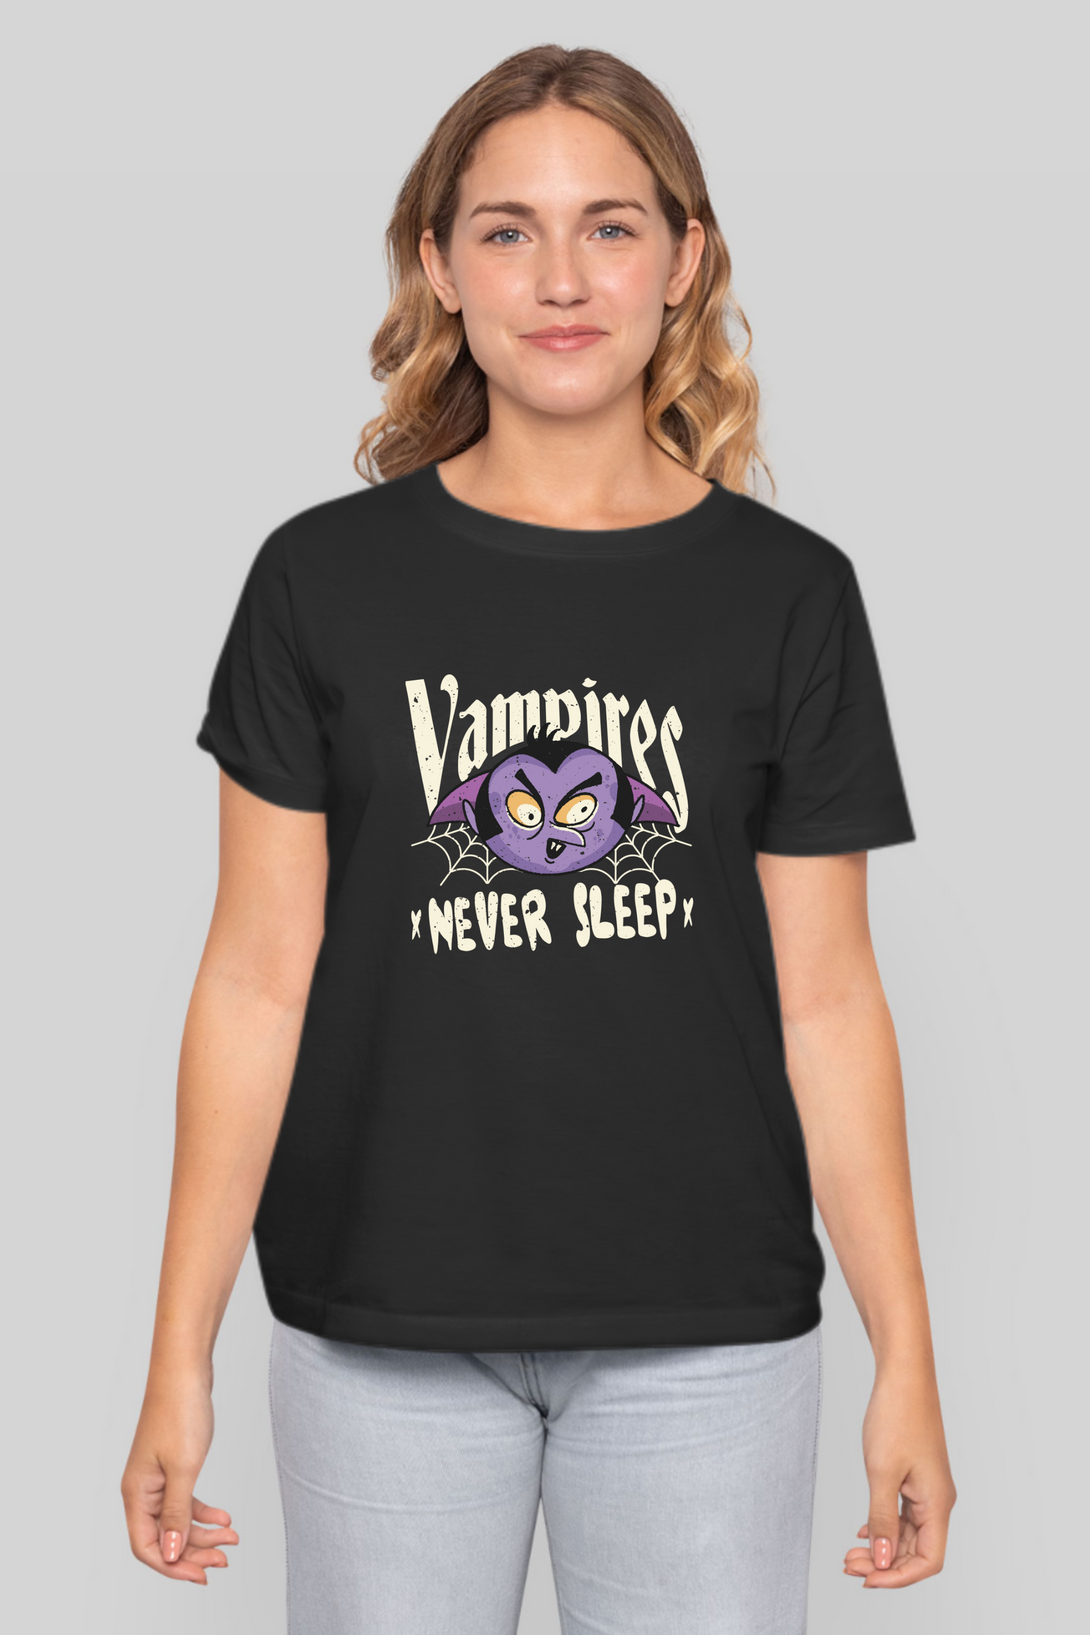 Vampires Never Sleep Printed T-Shirt For Women - WowWaves - 8